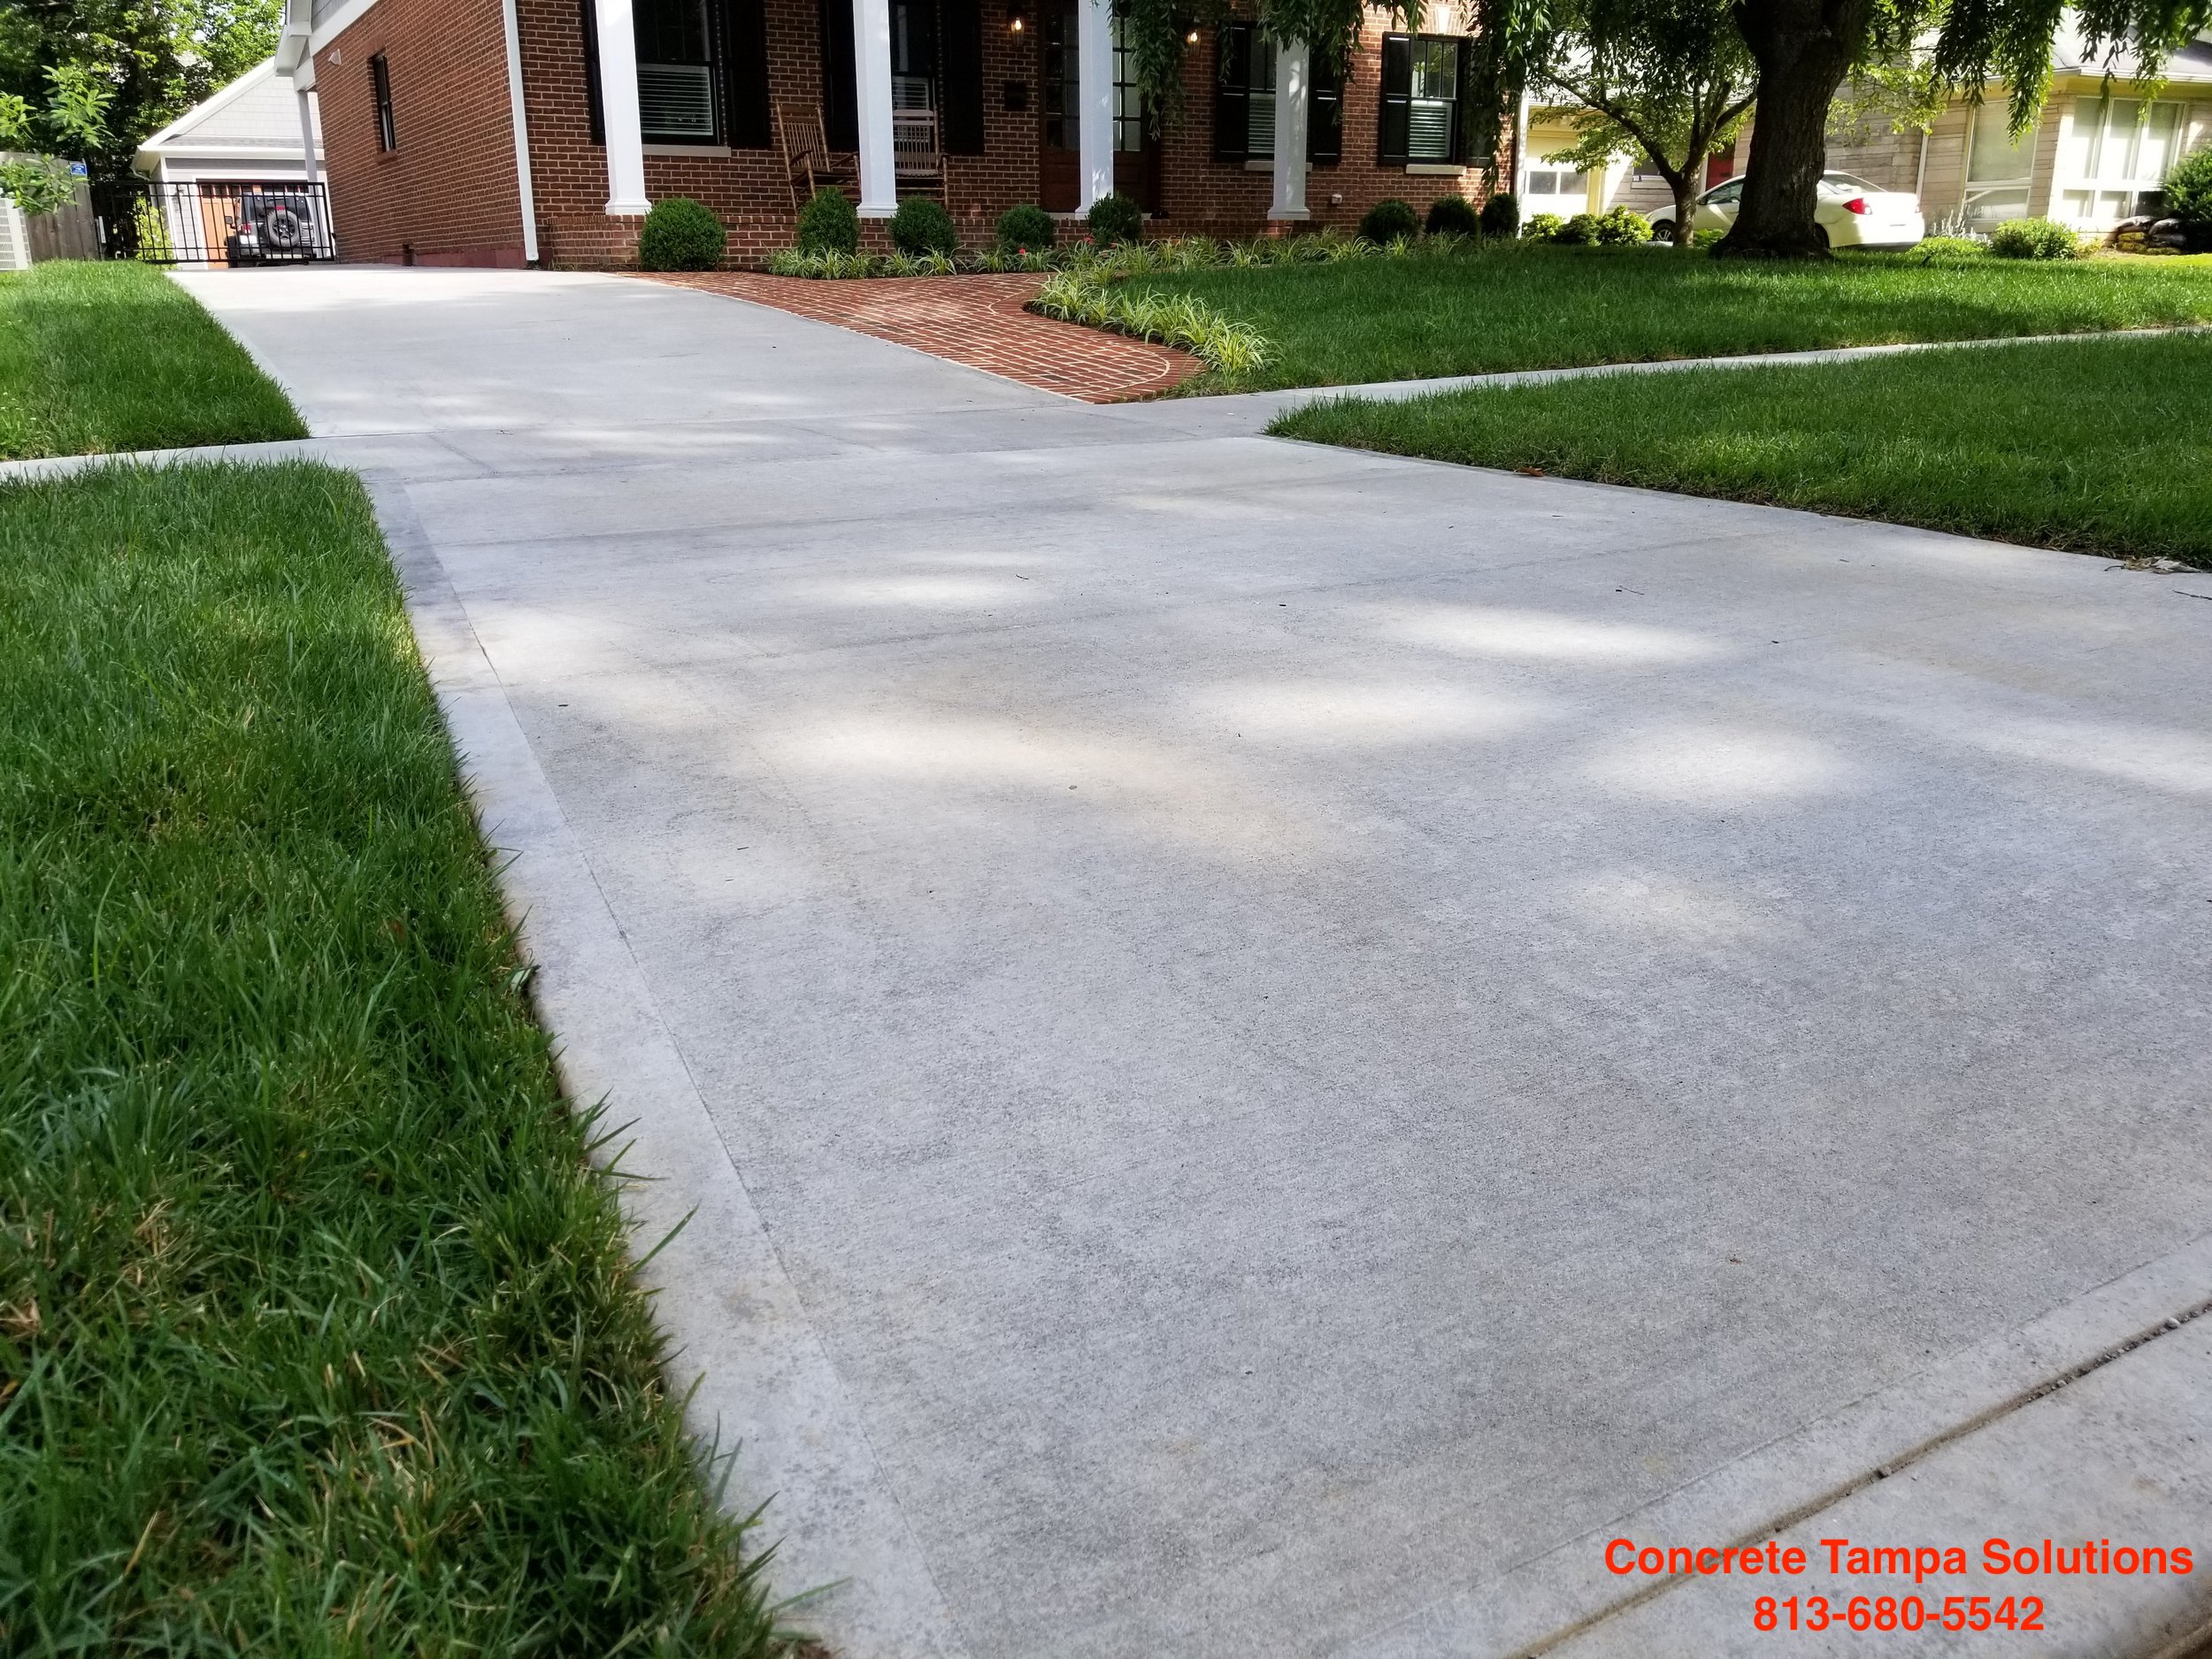 Concrete Tampa Solutions Are The Concrete Contractors Of Tampa Florida 